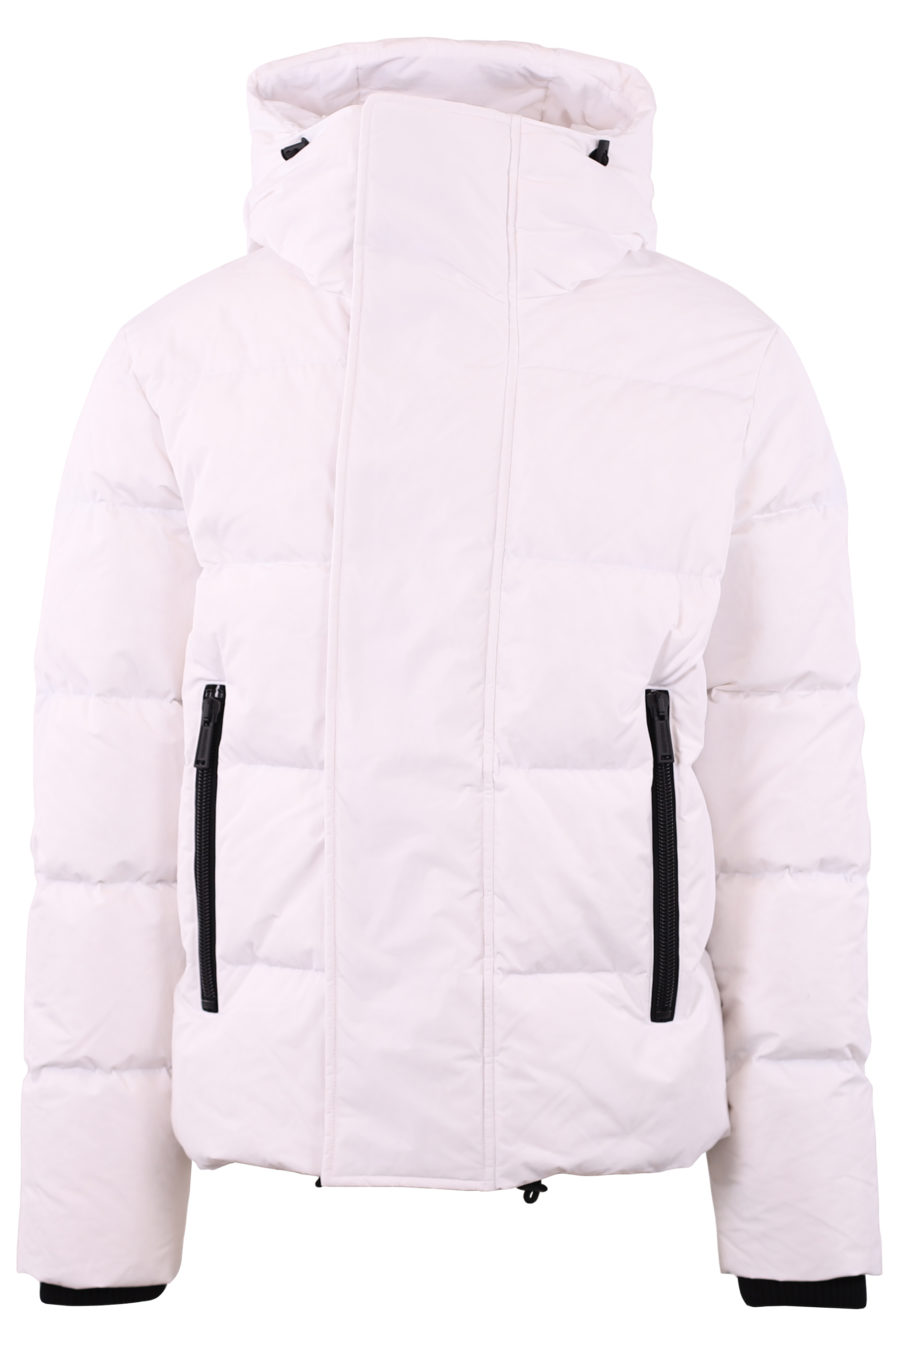 White jacket with logo on the zip - IMG 7245